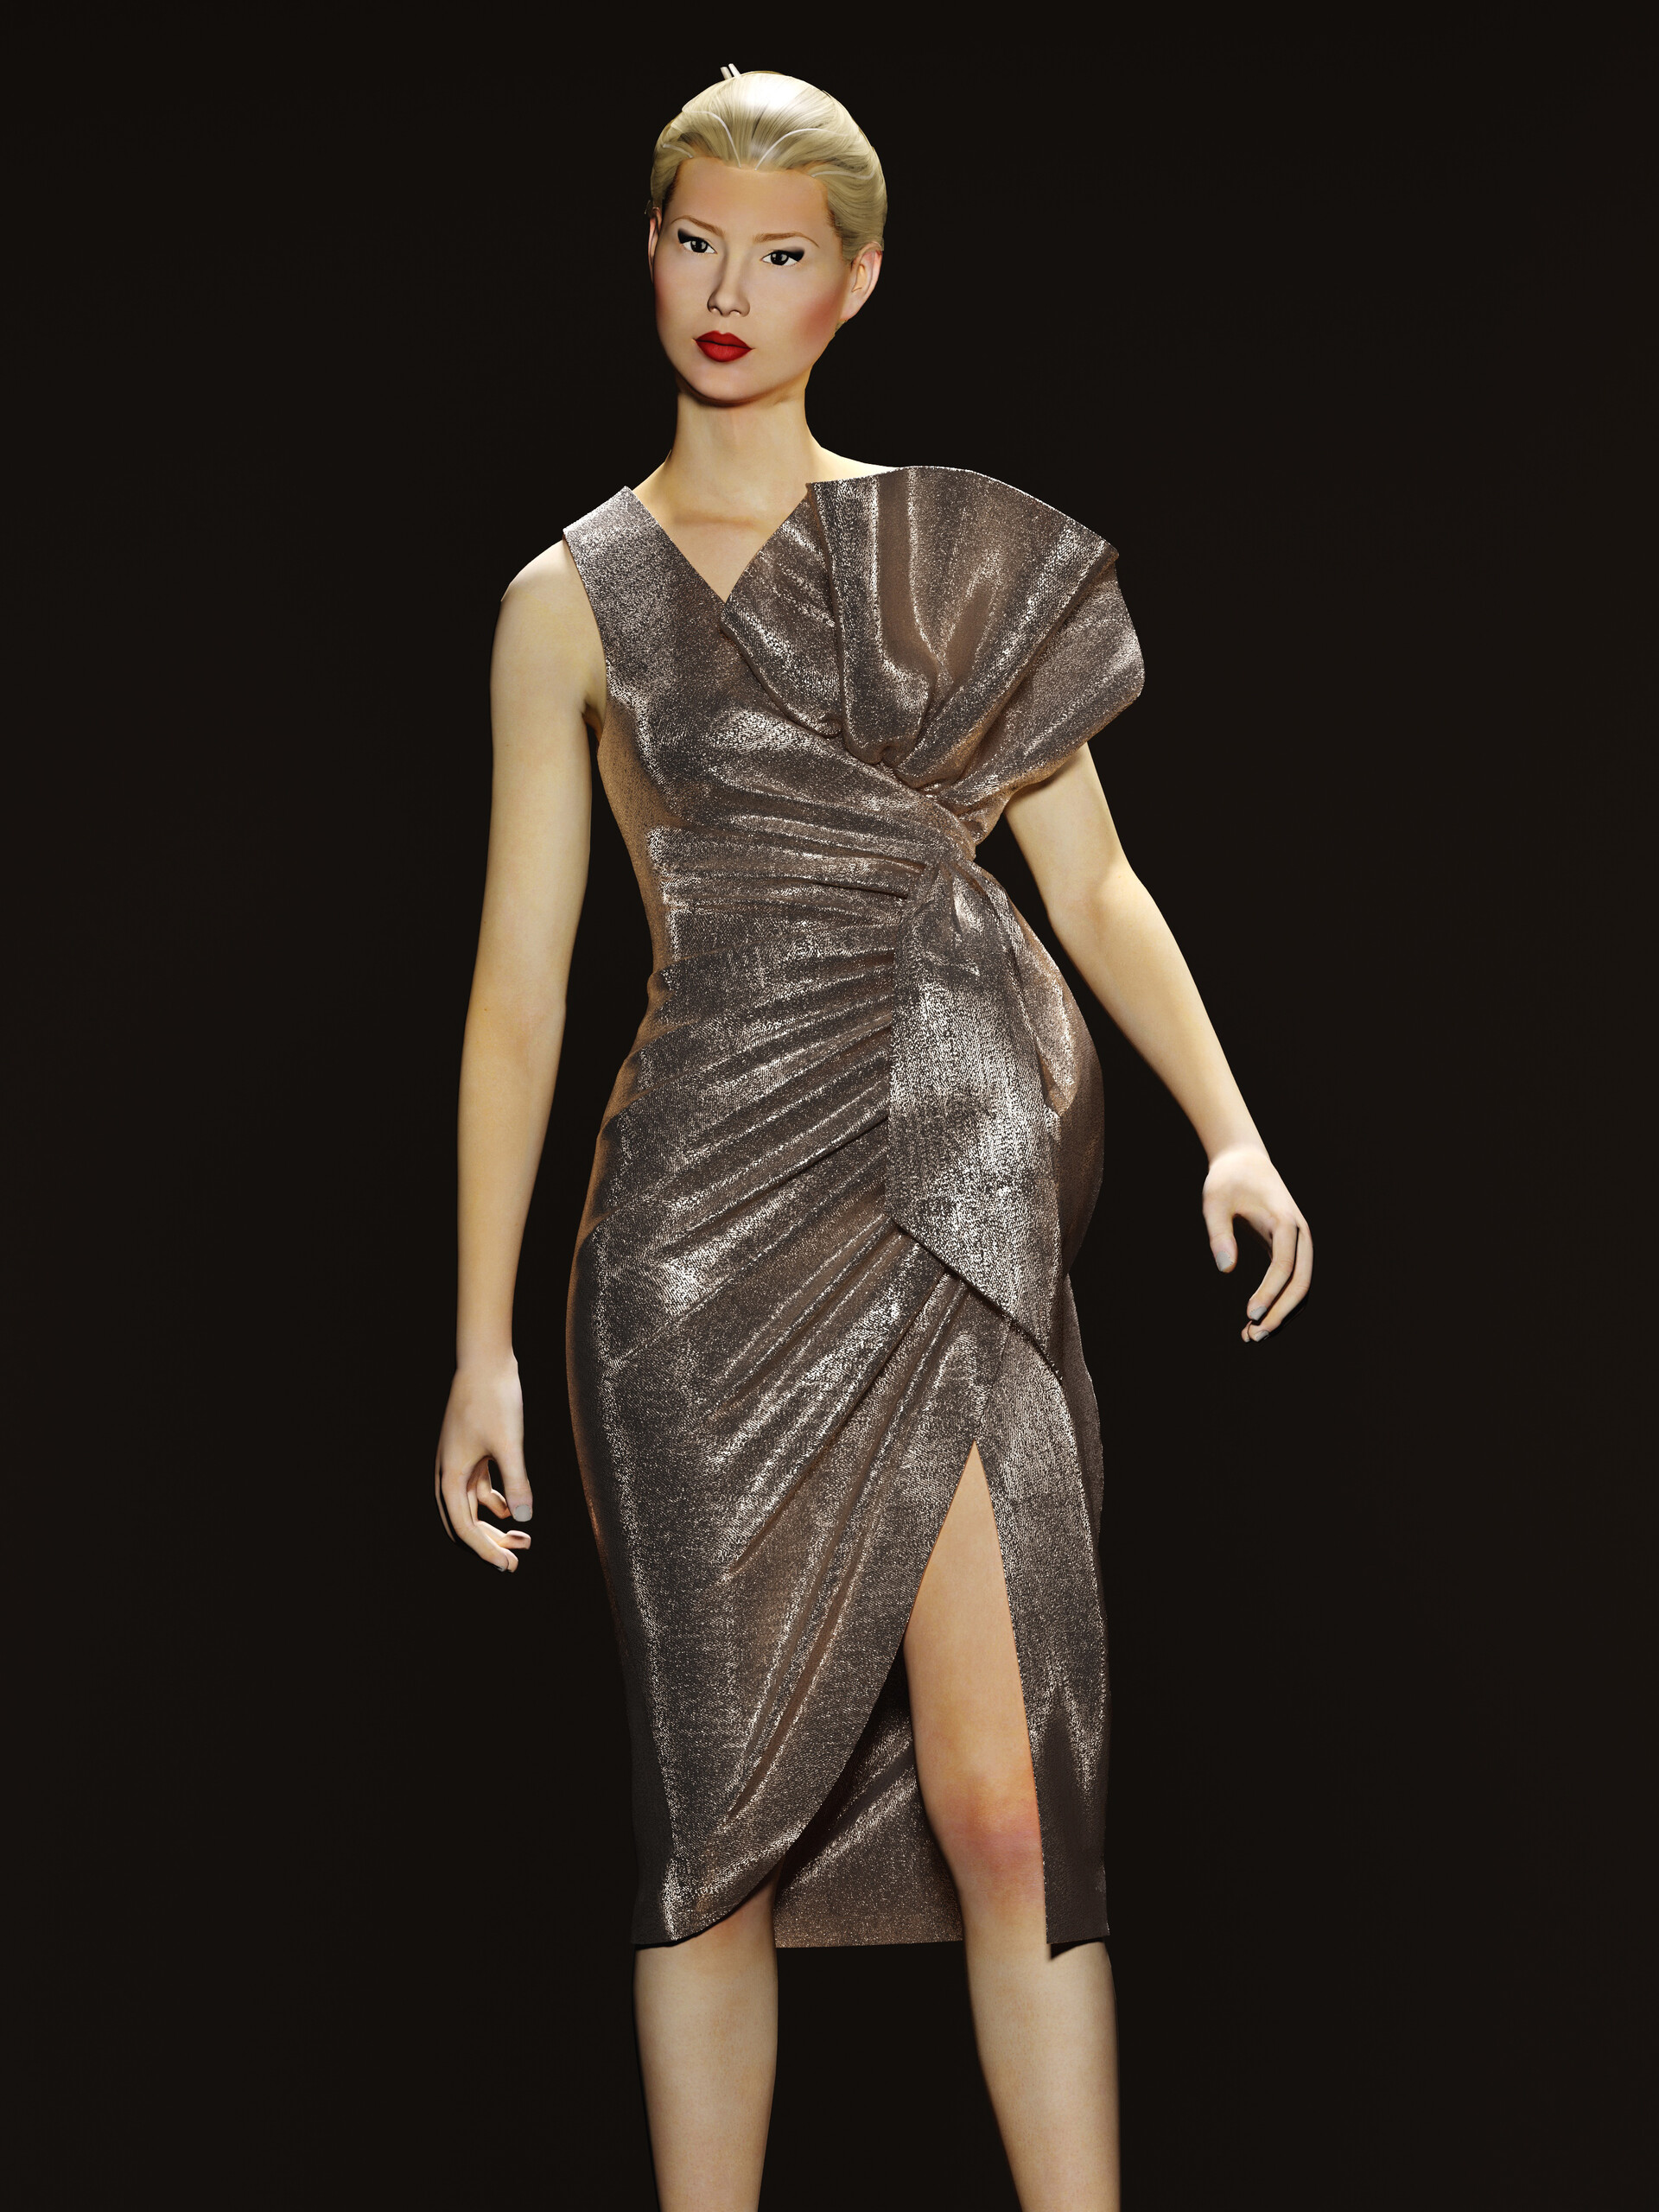 ArtStation - 3d dress